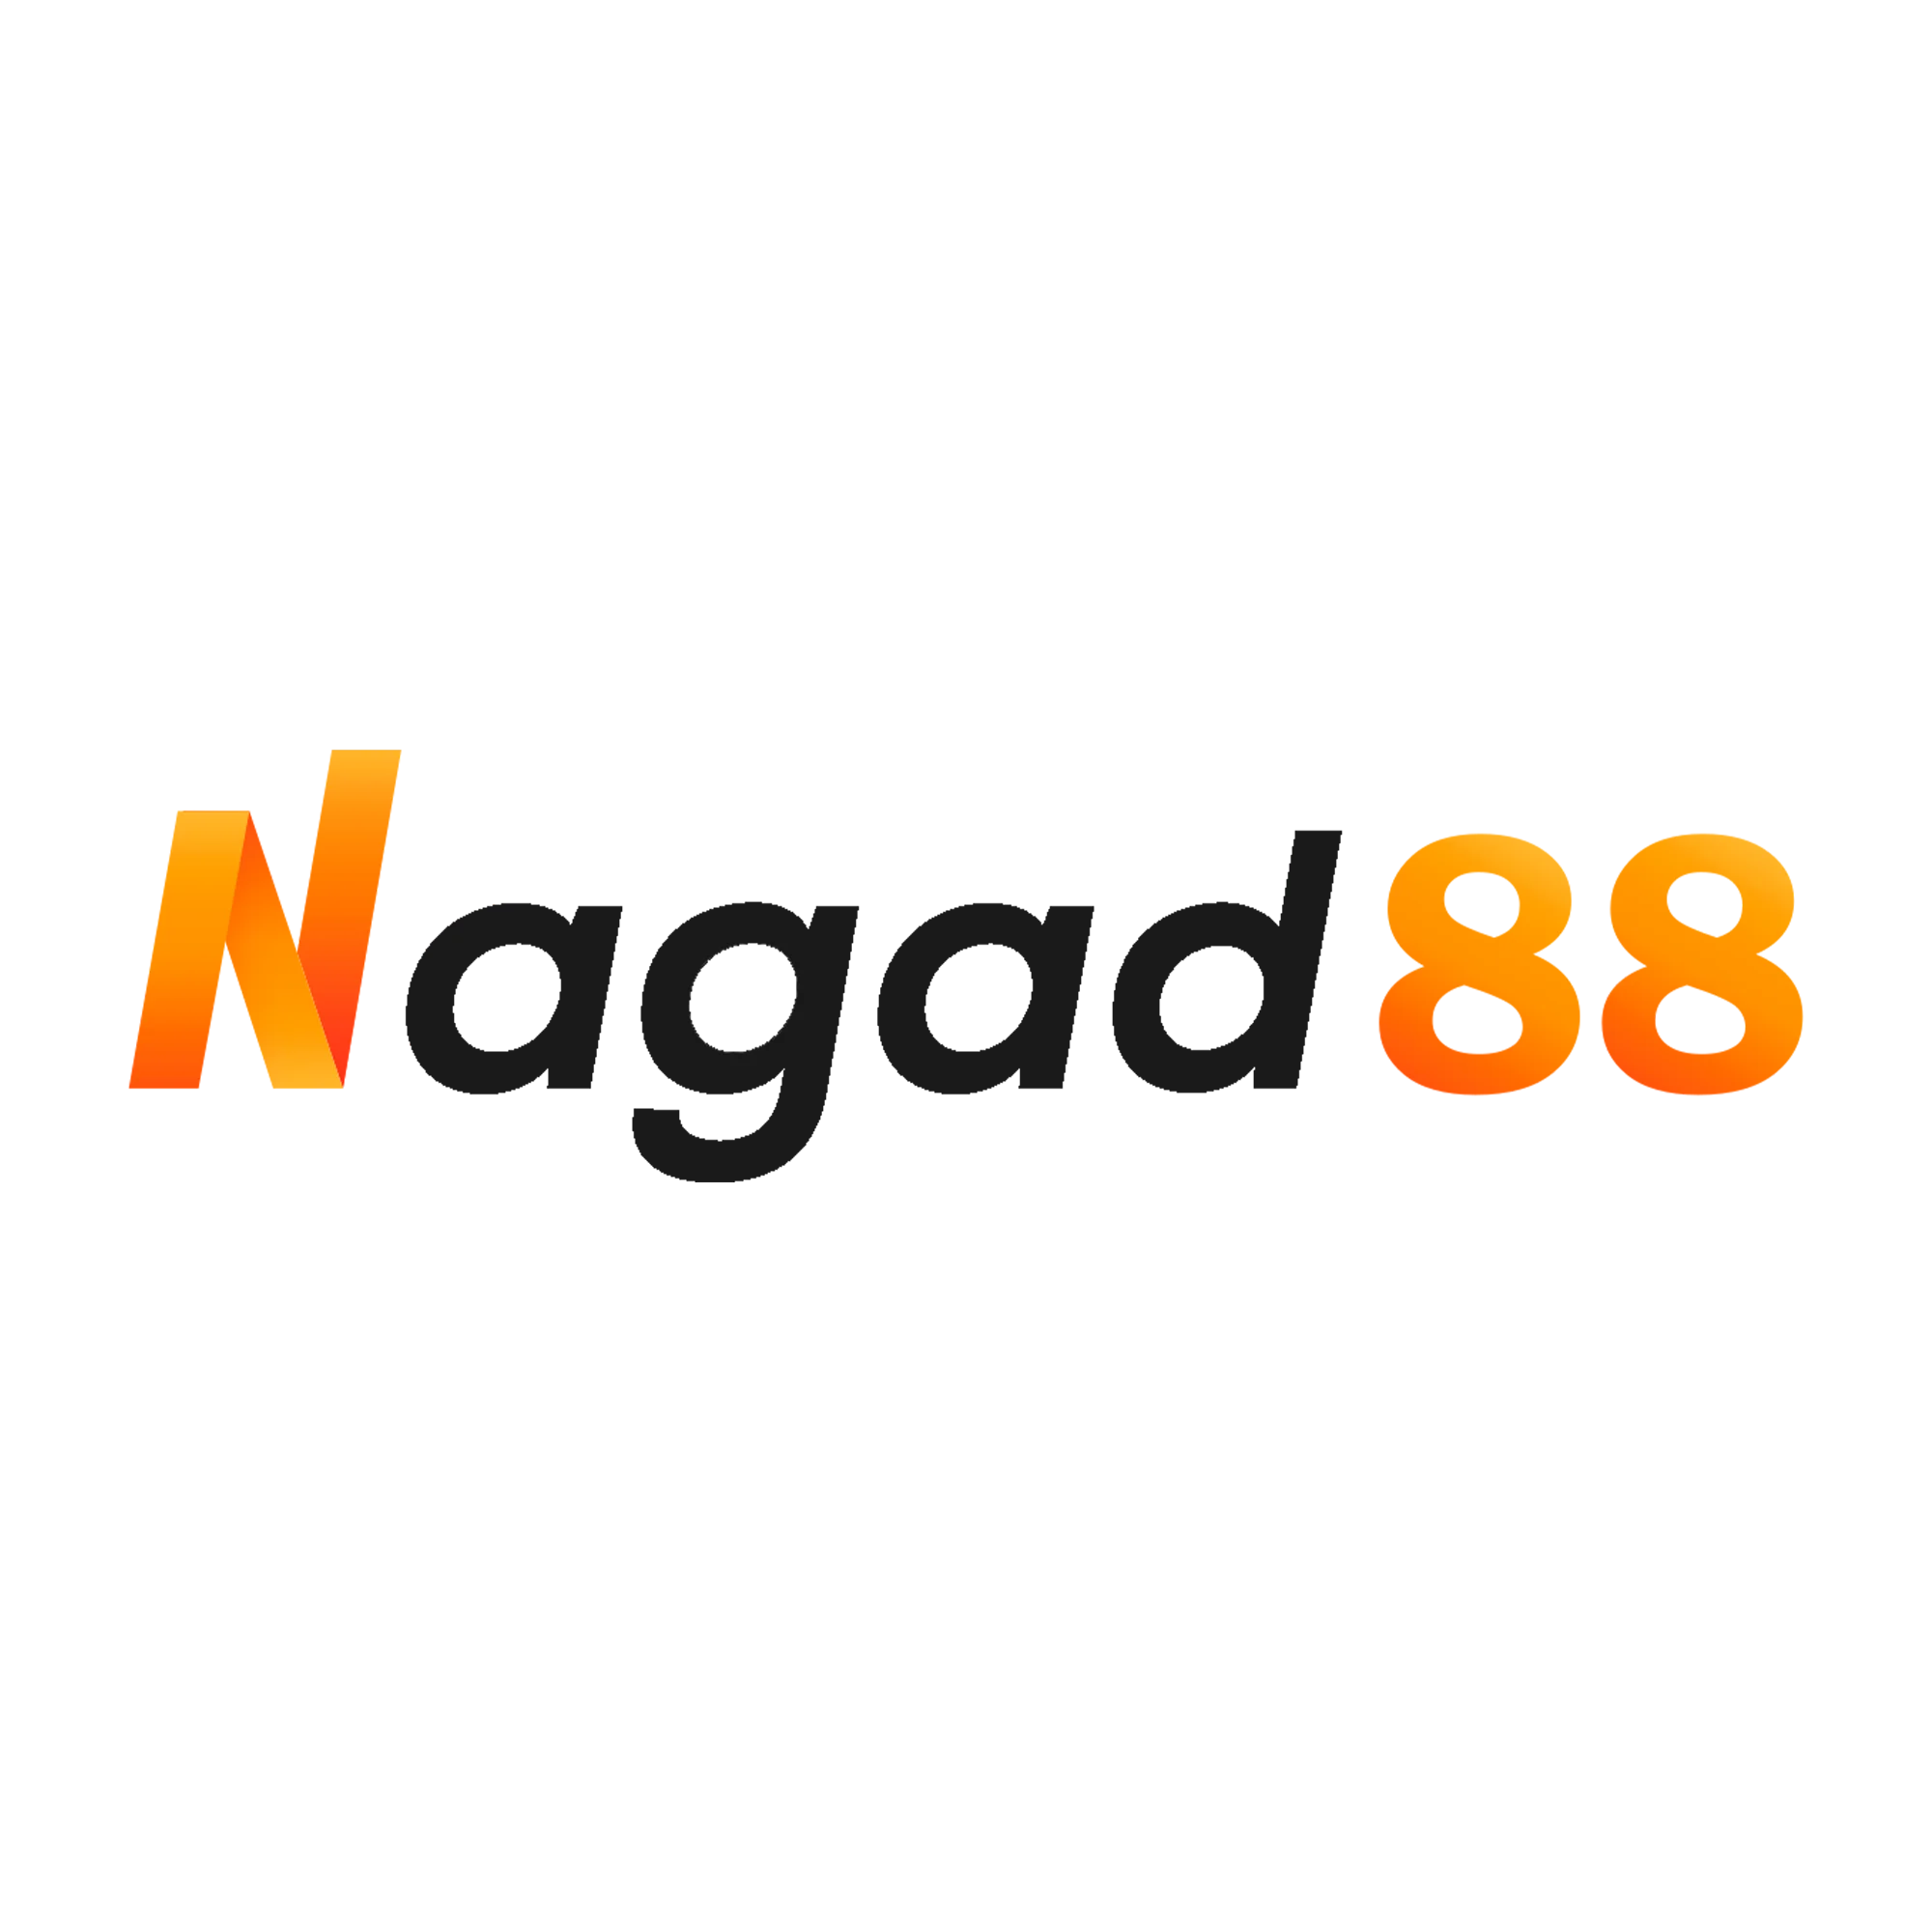 Nagad88 App